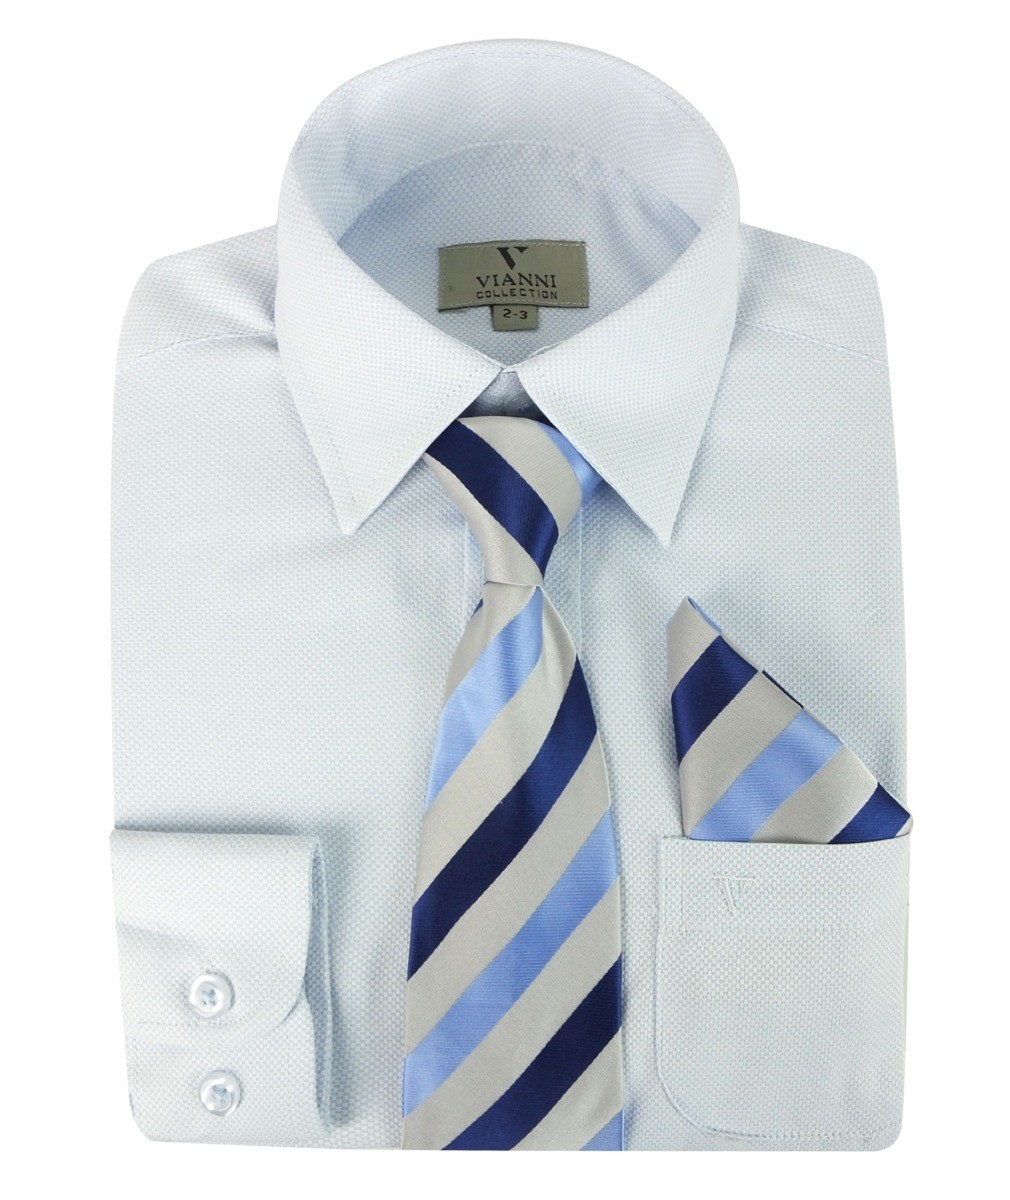 Boys Cotton Blend Long Sleeve Shirt, Tie & Hanky Set - Light Blue- Patterned Tie